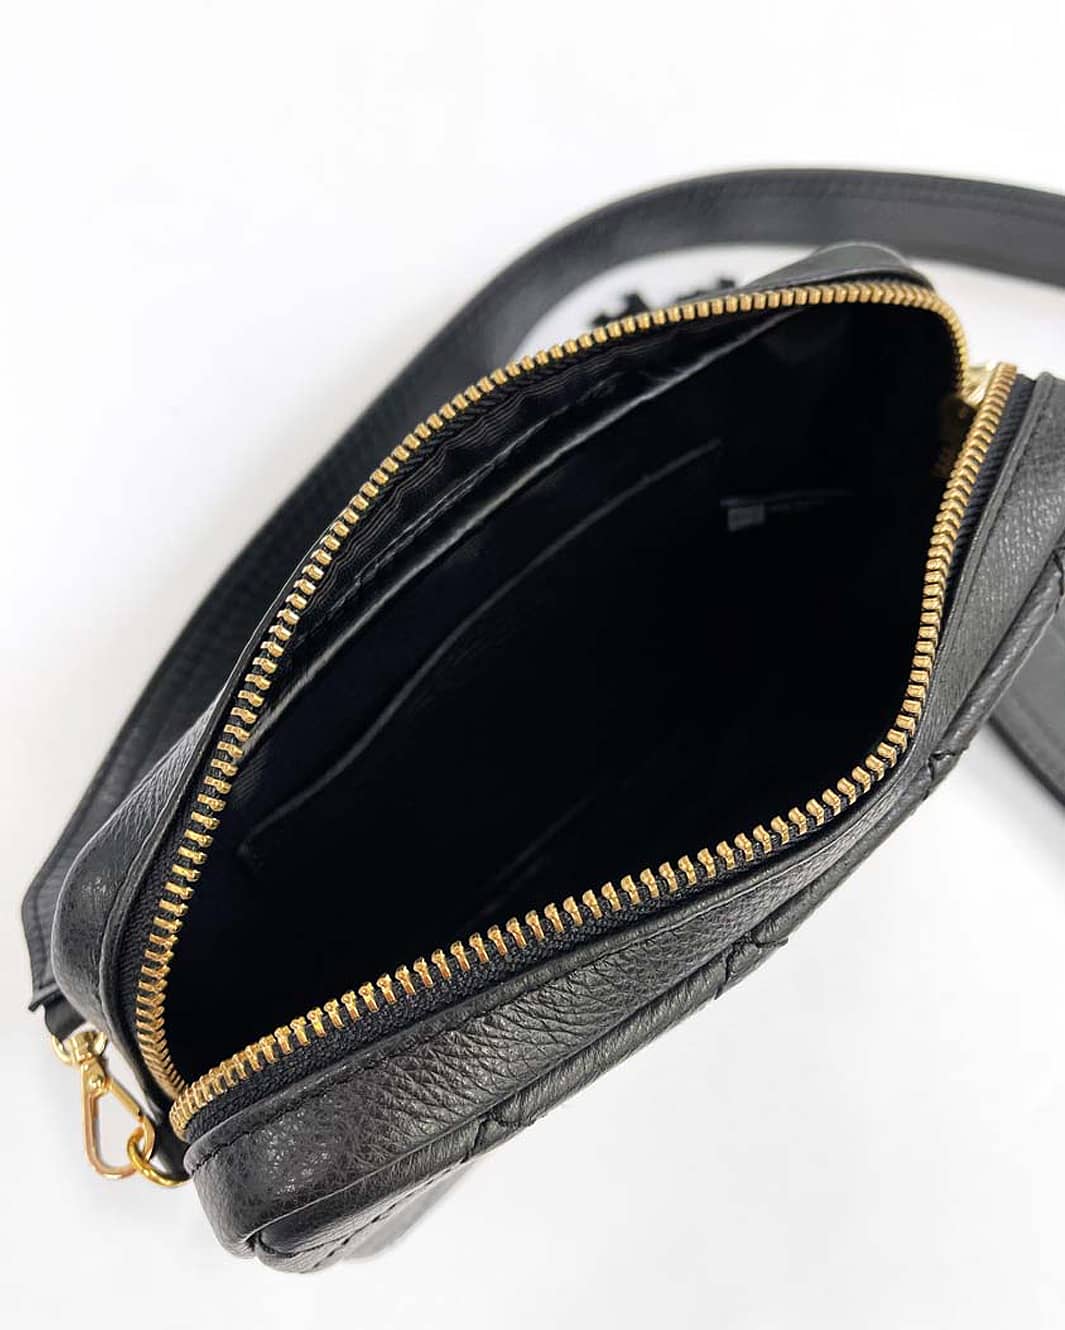 Brave Leather Black Vittoria Bag